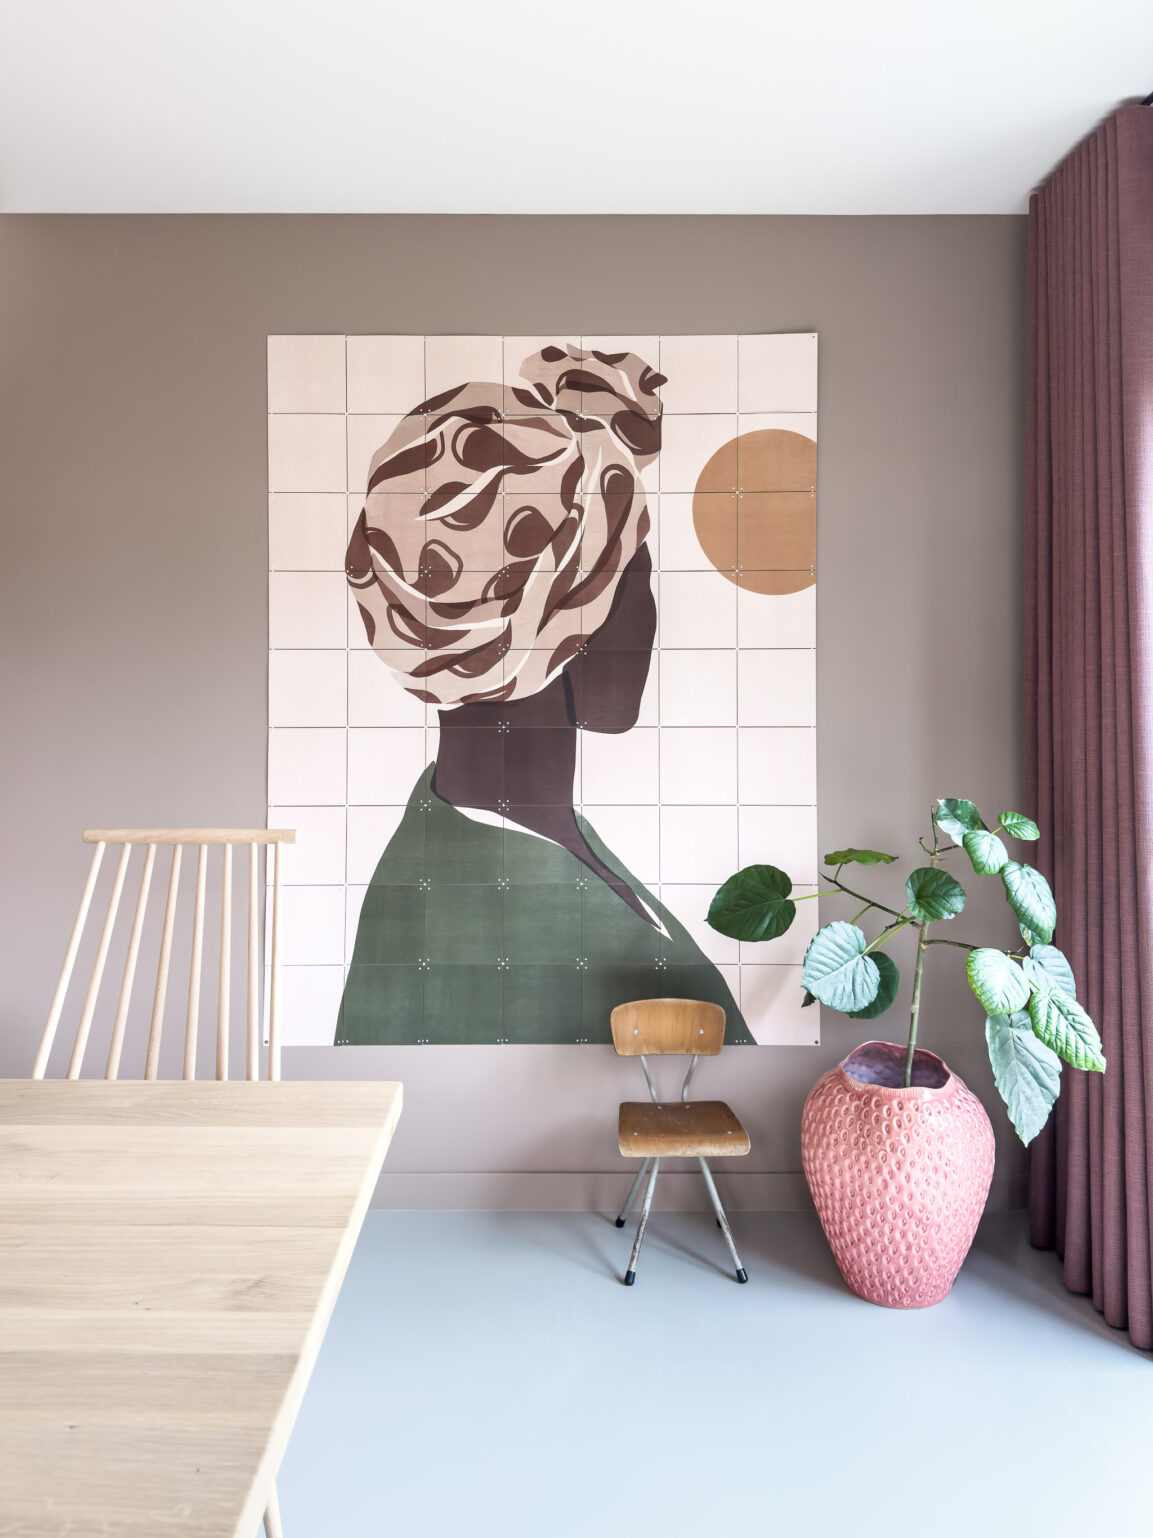 interieurontwerpster Baukje Snieder houdt van printjes en kleurtjes